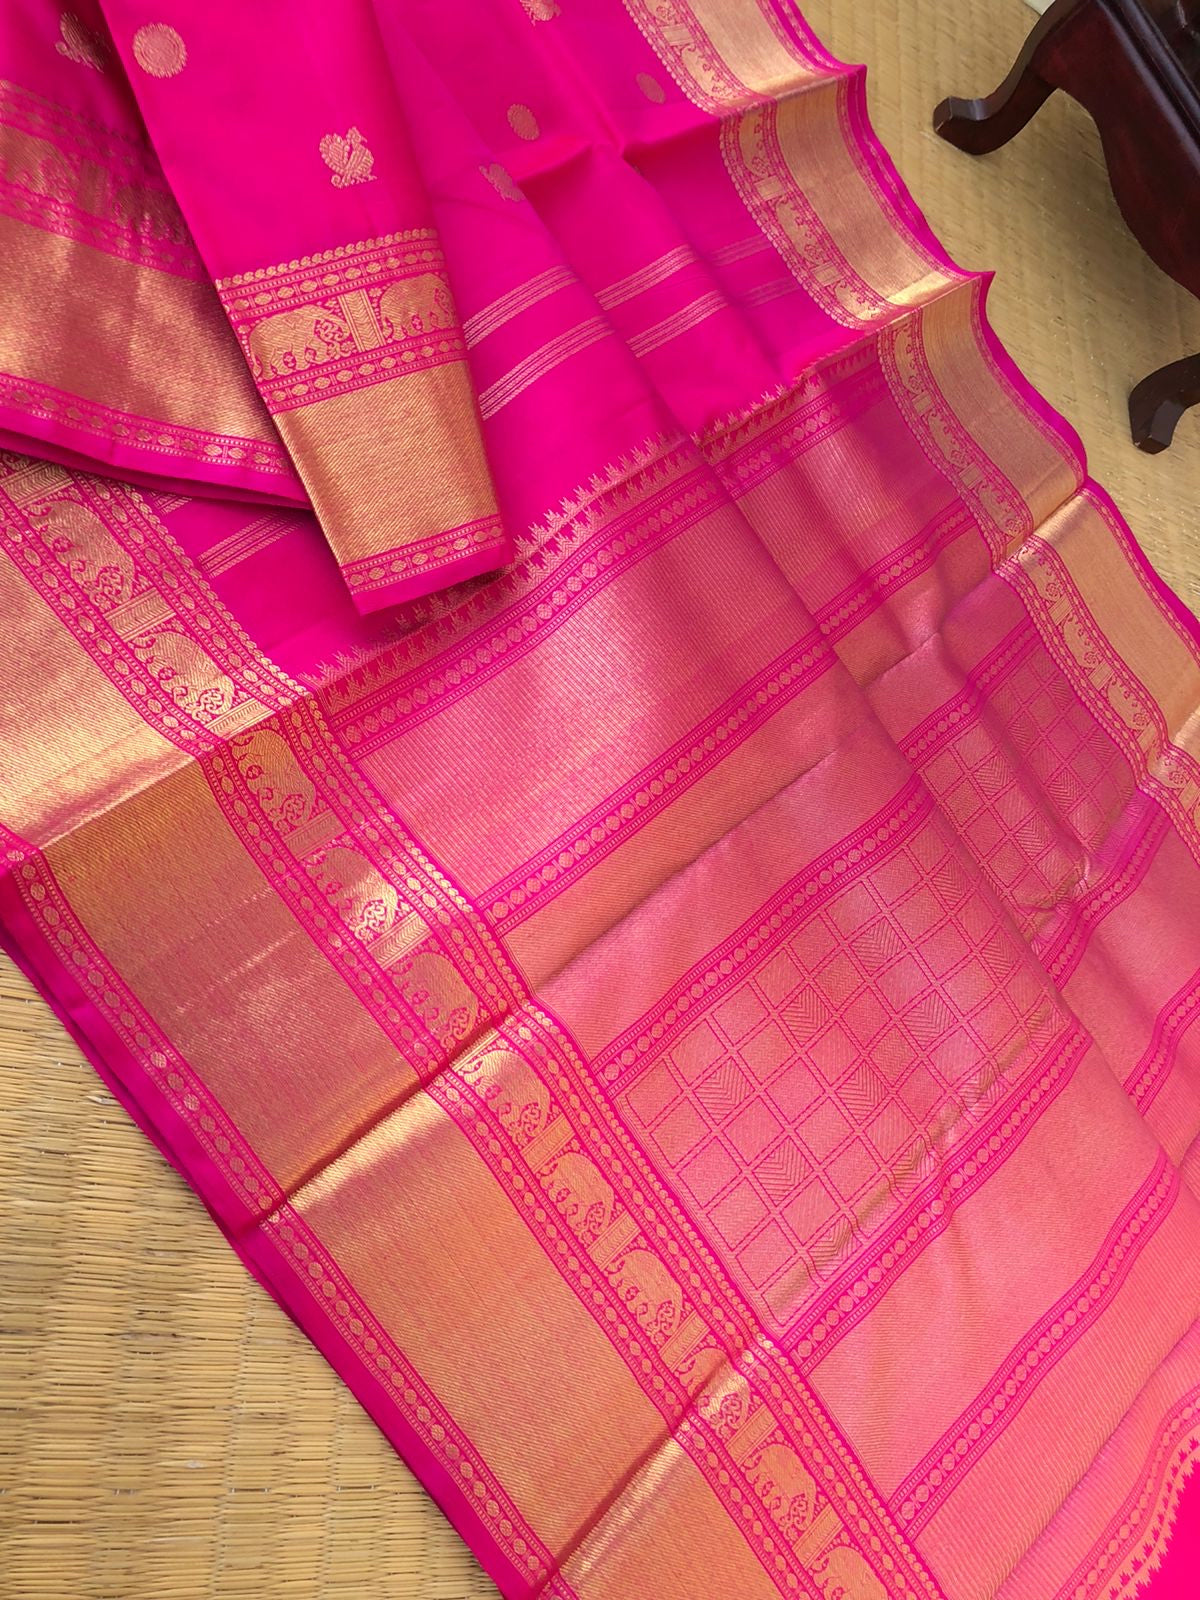 Tara - Traditional Colours on Traditional Kanchivarams - the most beautiful vibrant Kanchivaram pink and gold